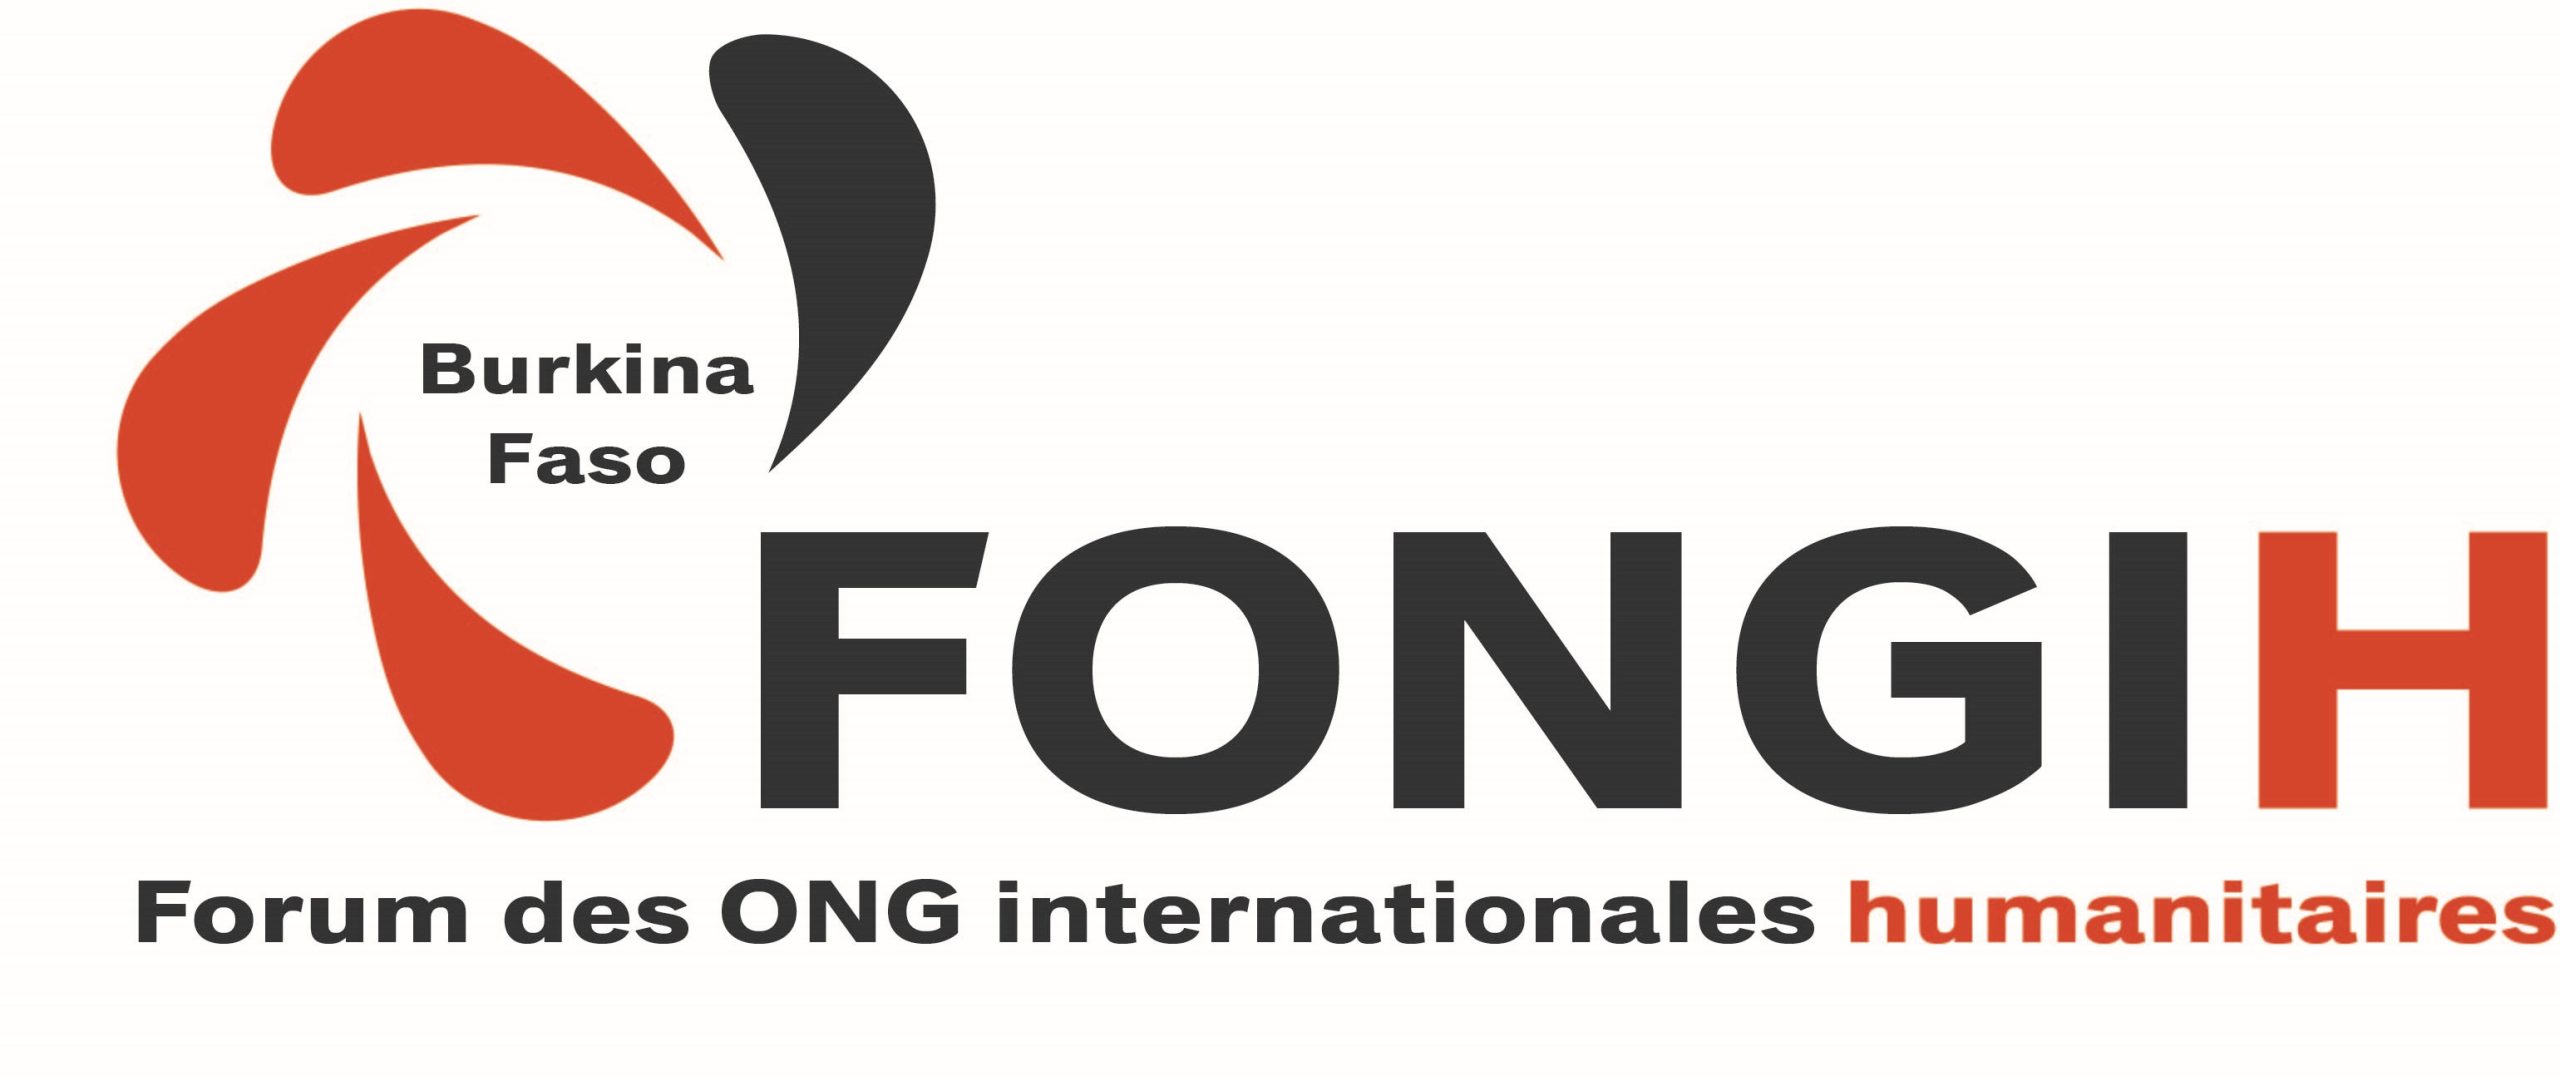 FONGIH Burkina